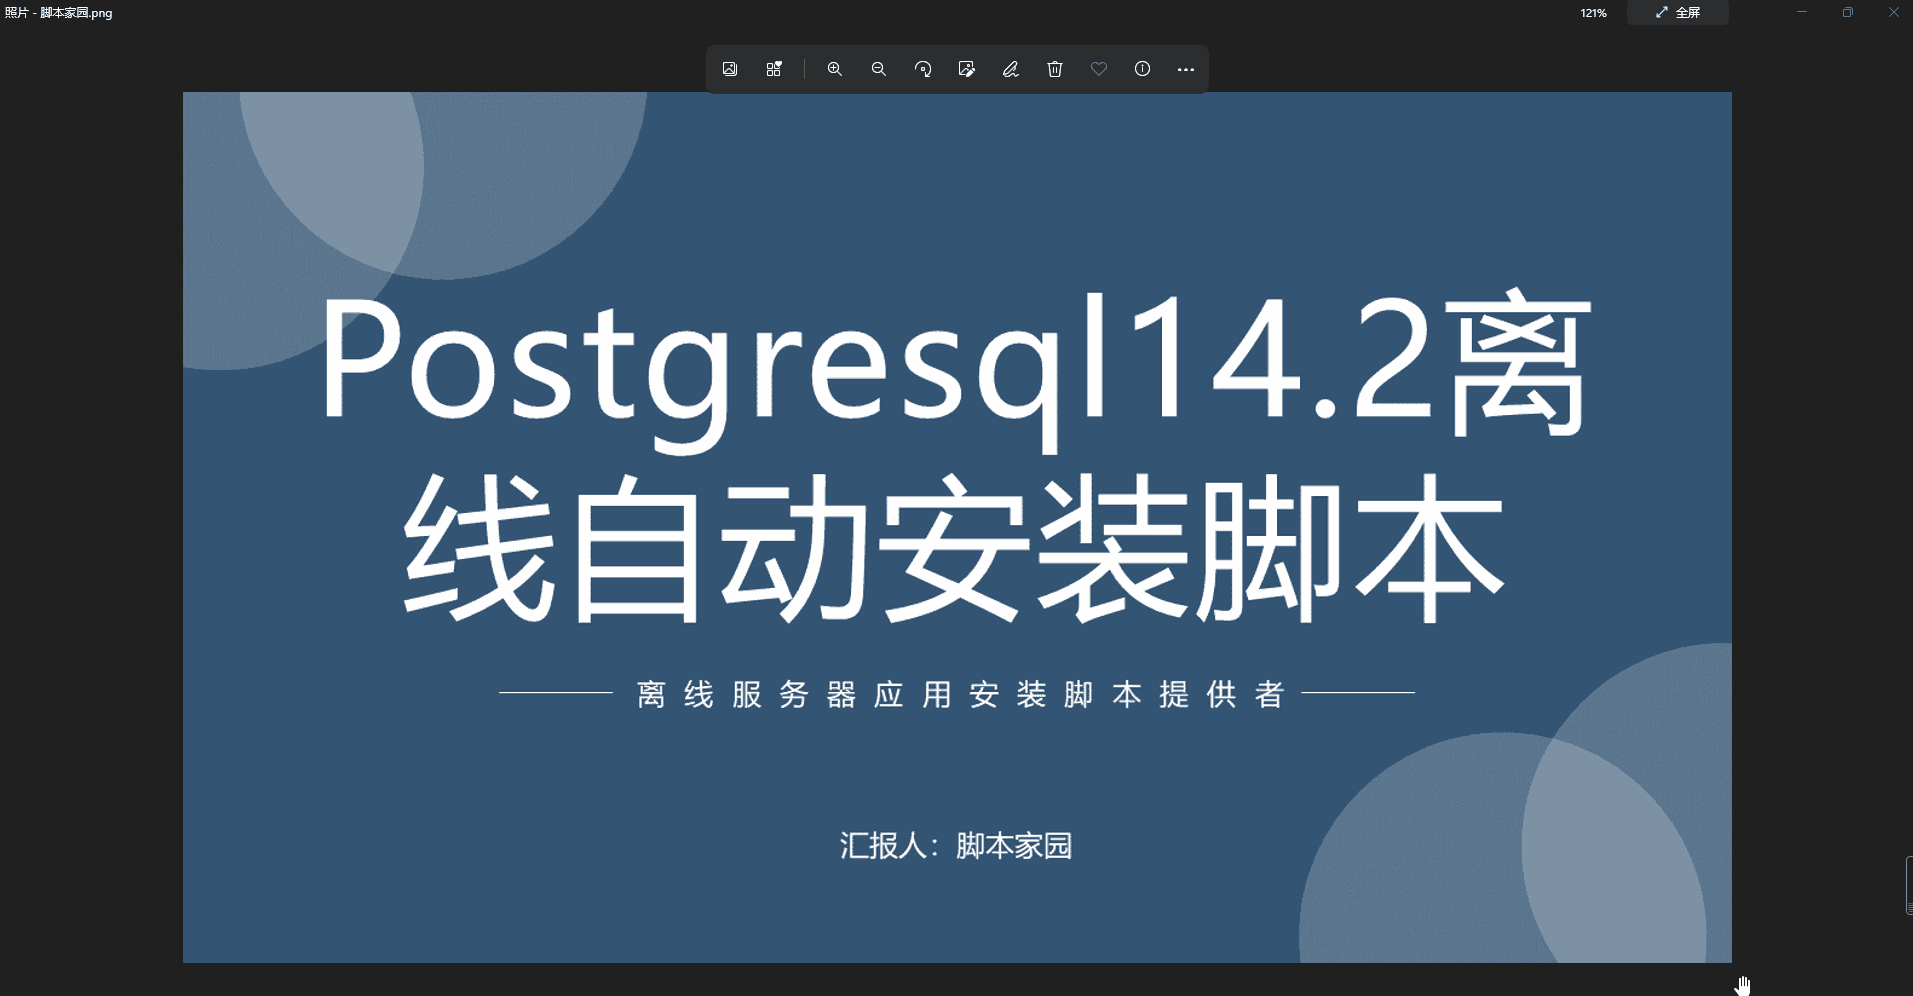 Linux离线服务器postgresql 14.2自动化安装脚本